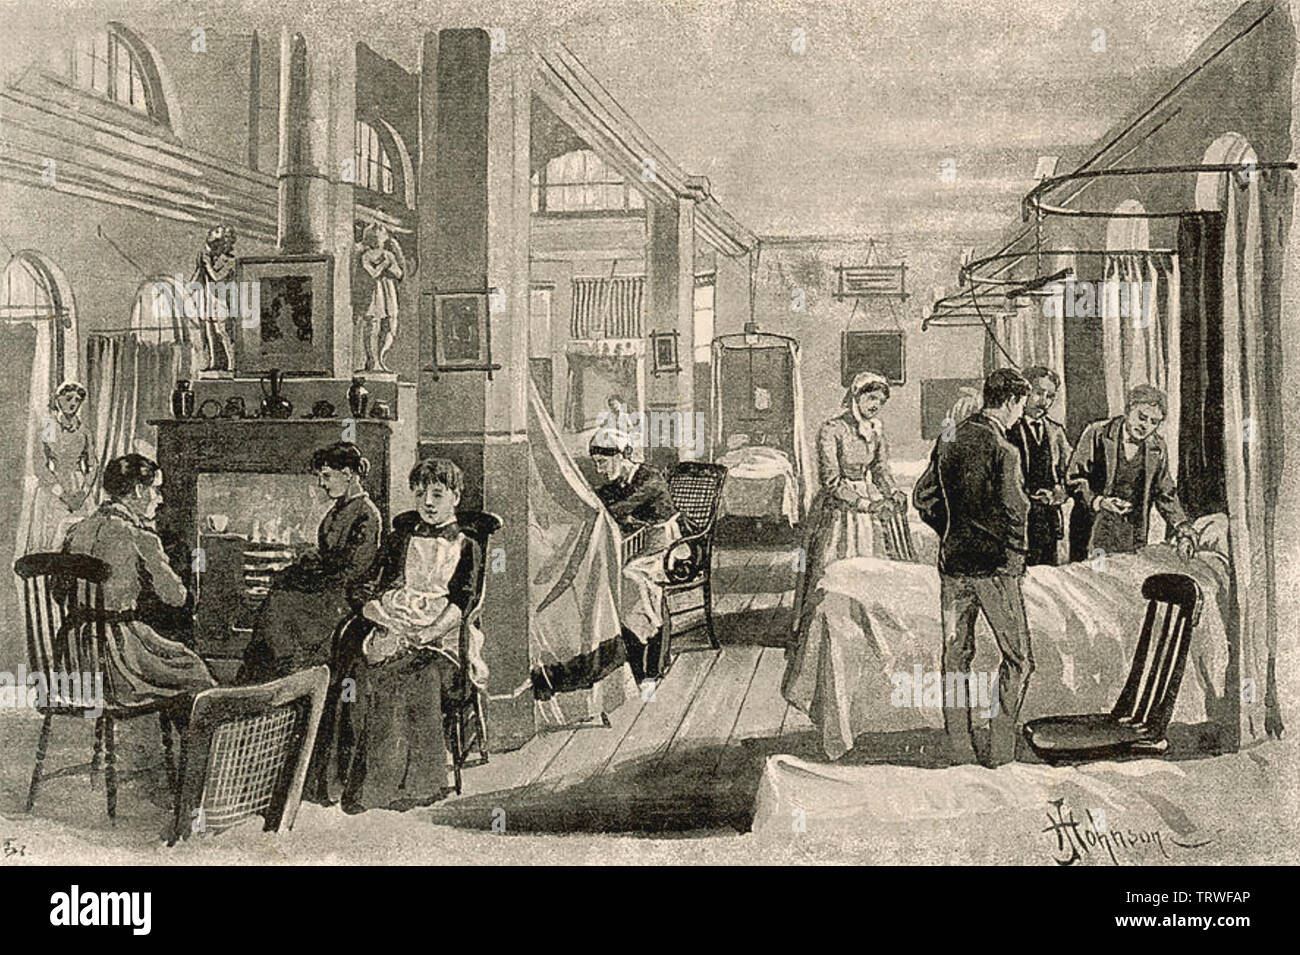 GUY'S HOSPITAL London a, Southwark,about 1870 Stock Photo